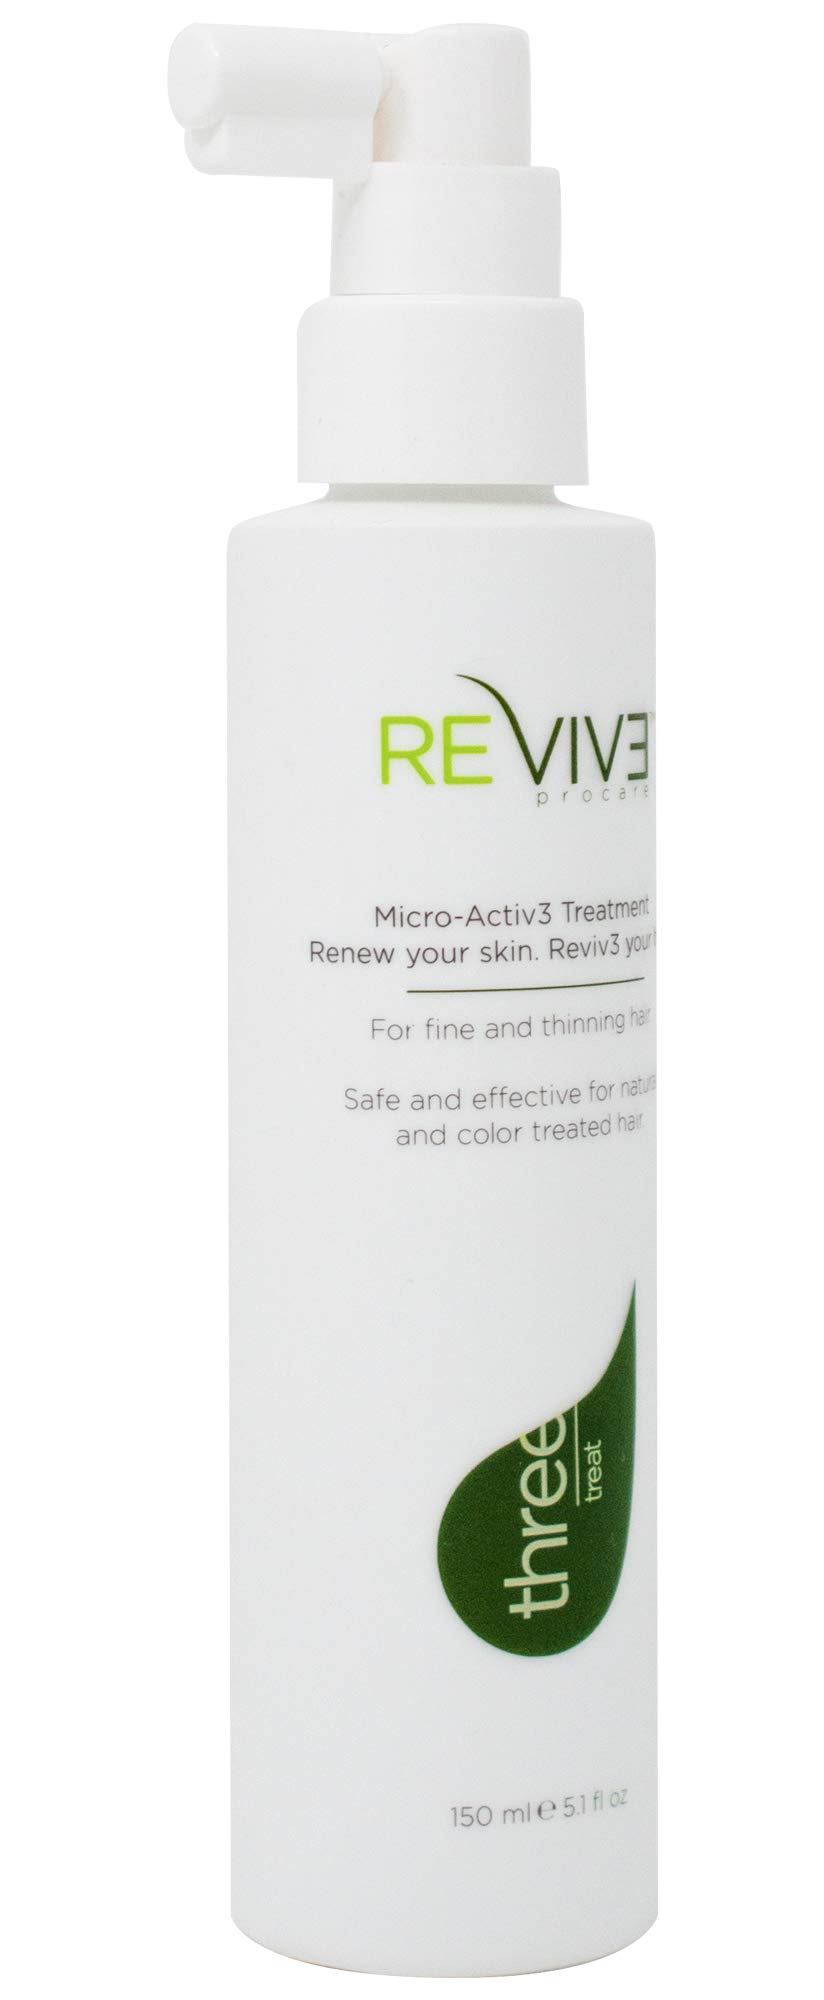 REVIV3 ProCare Treat: MicroActiv3 Treatment